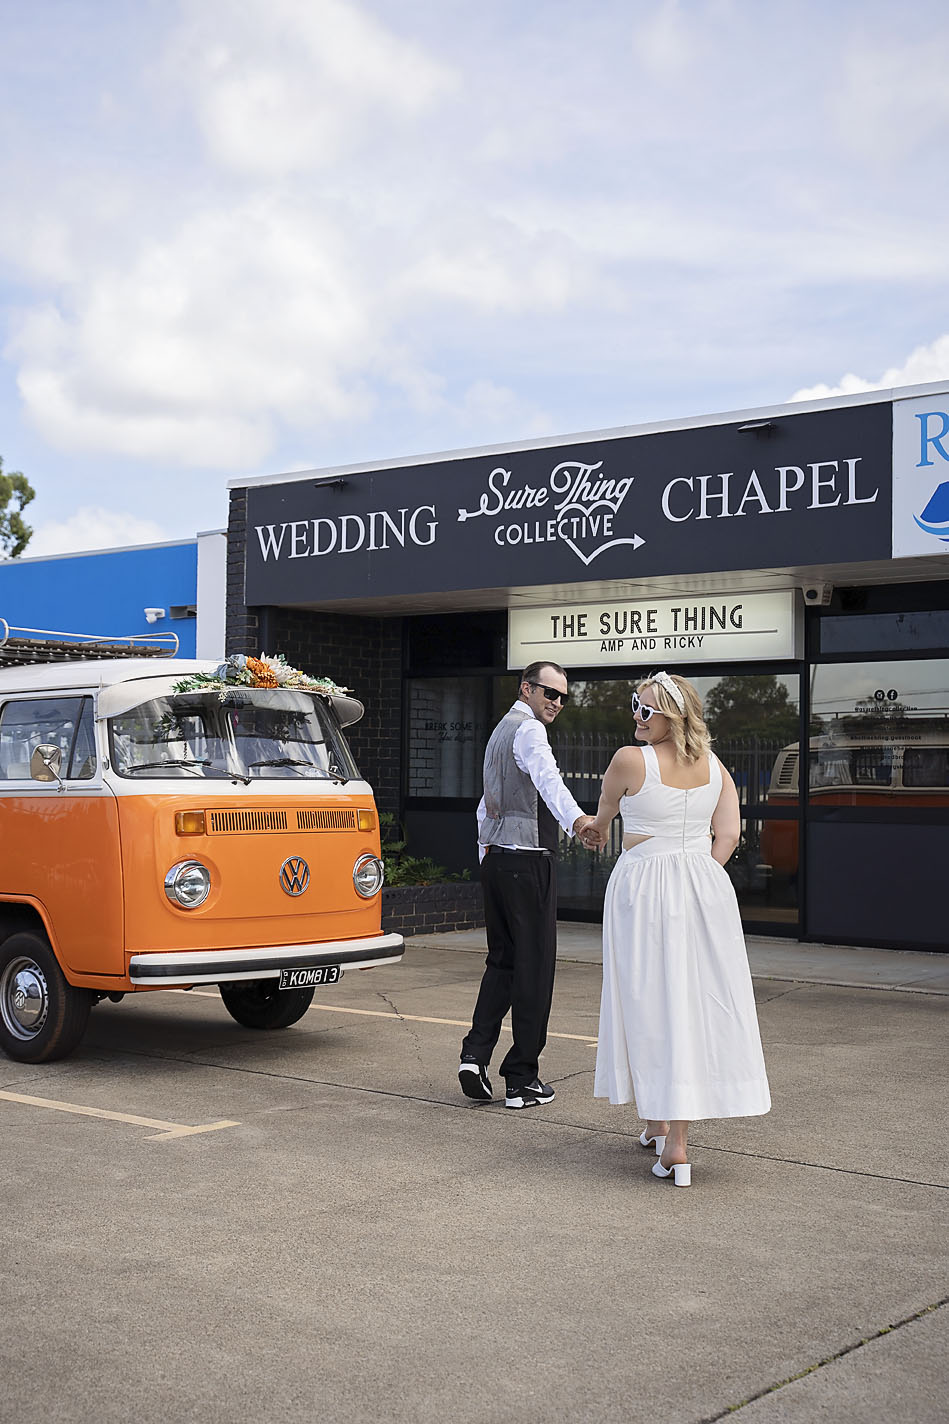 vegas style wedding chapel in brisbane redlands coast capalaba registry office wedding